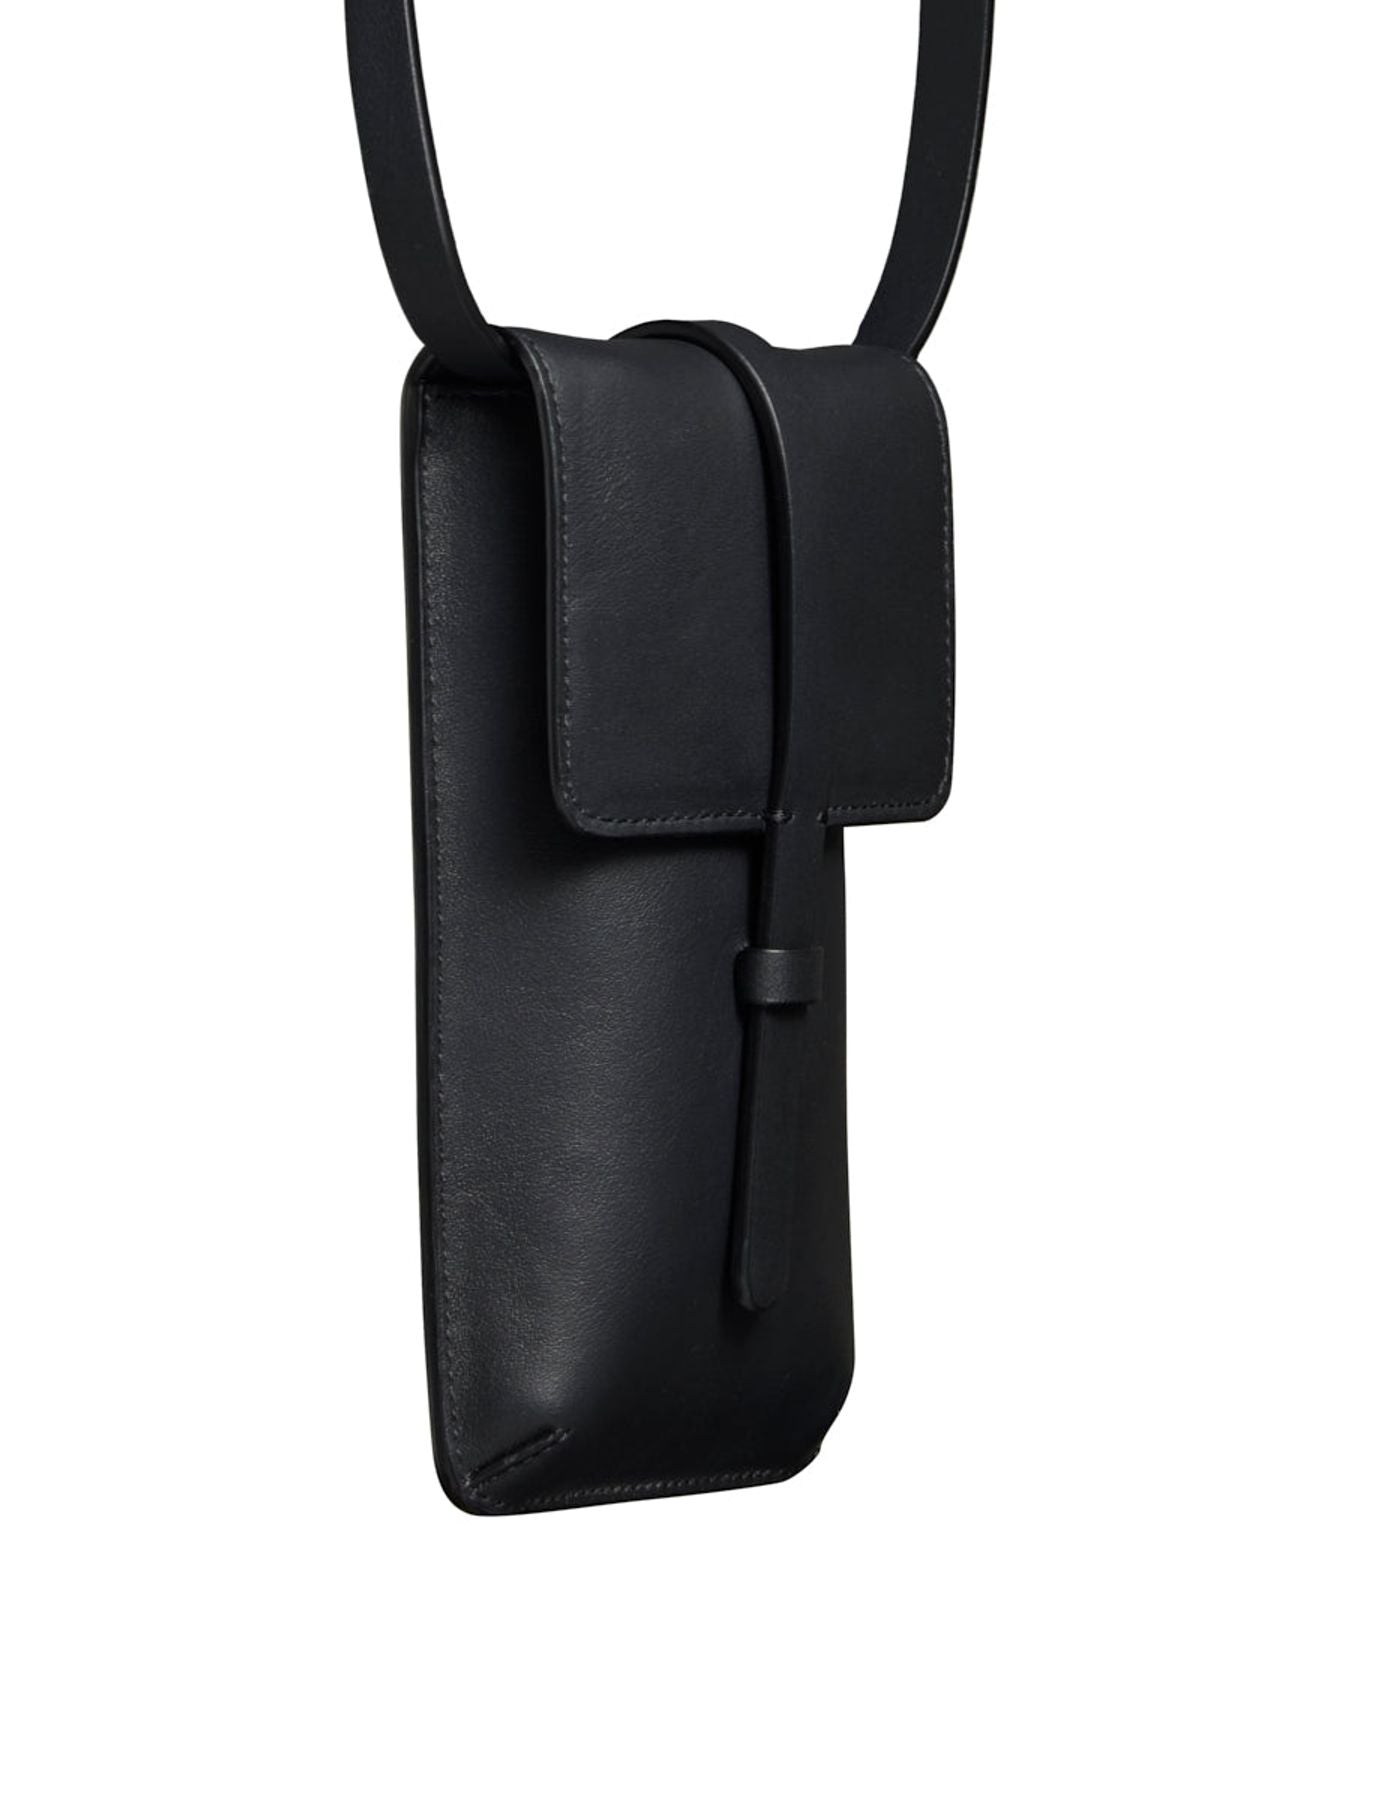 smartphone-bag-leonore-cuir-noir